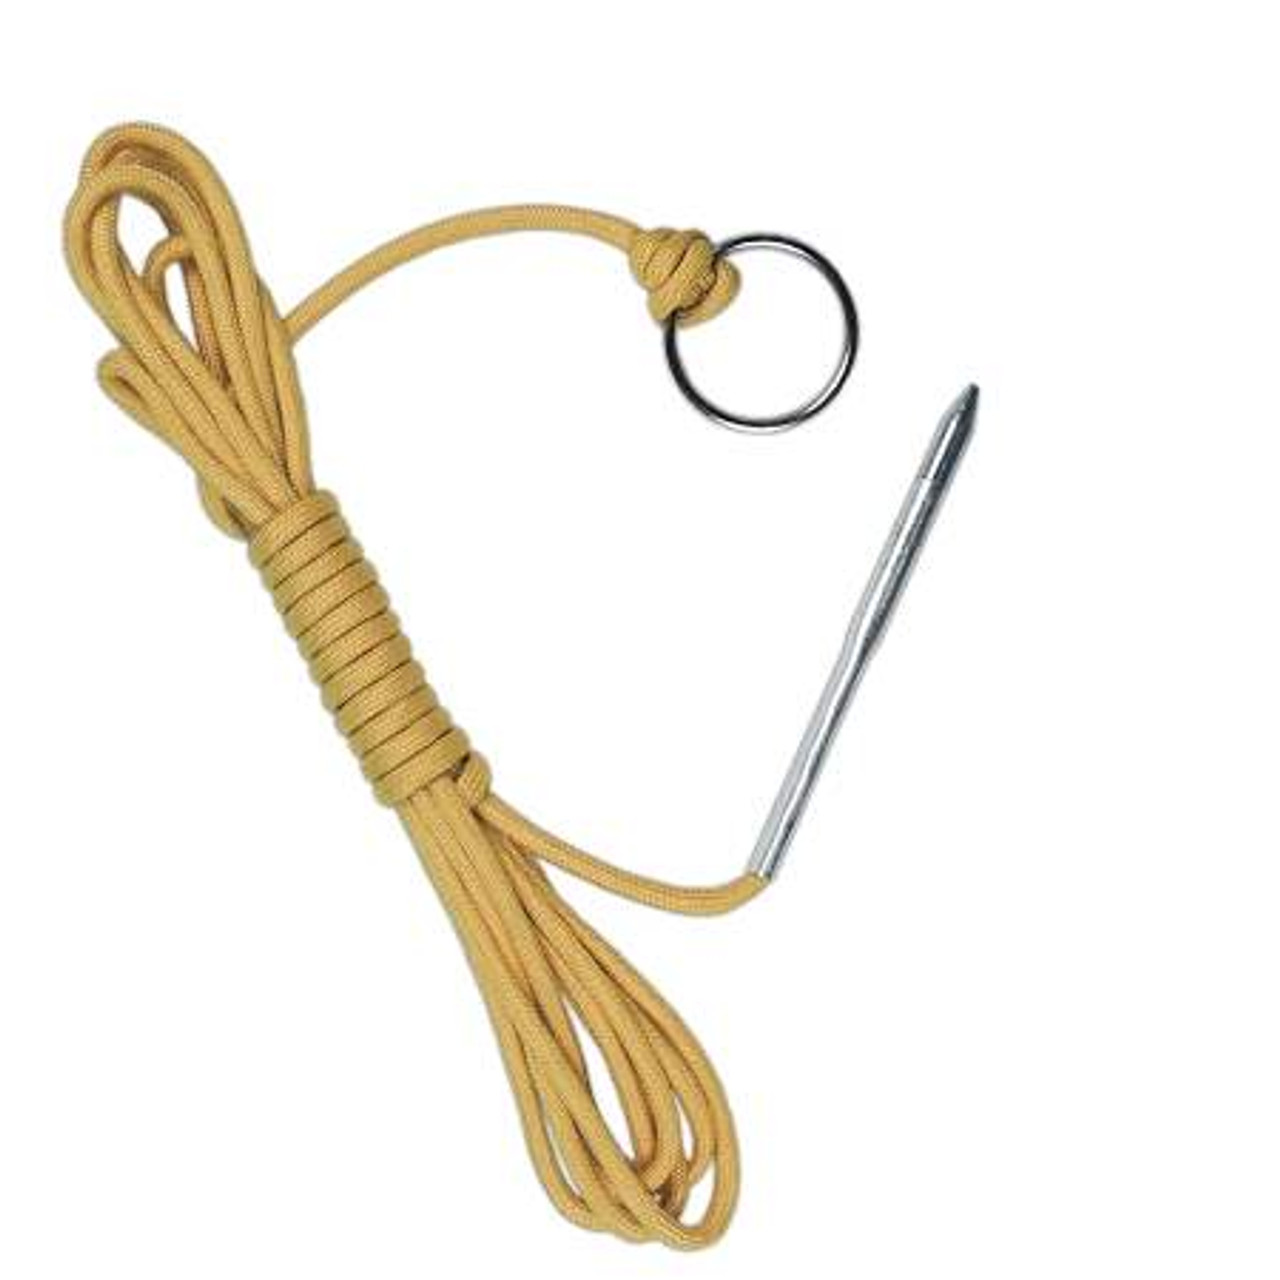 Cheap Fish Stringer Kit High Strength Long Rope Reusable Universal